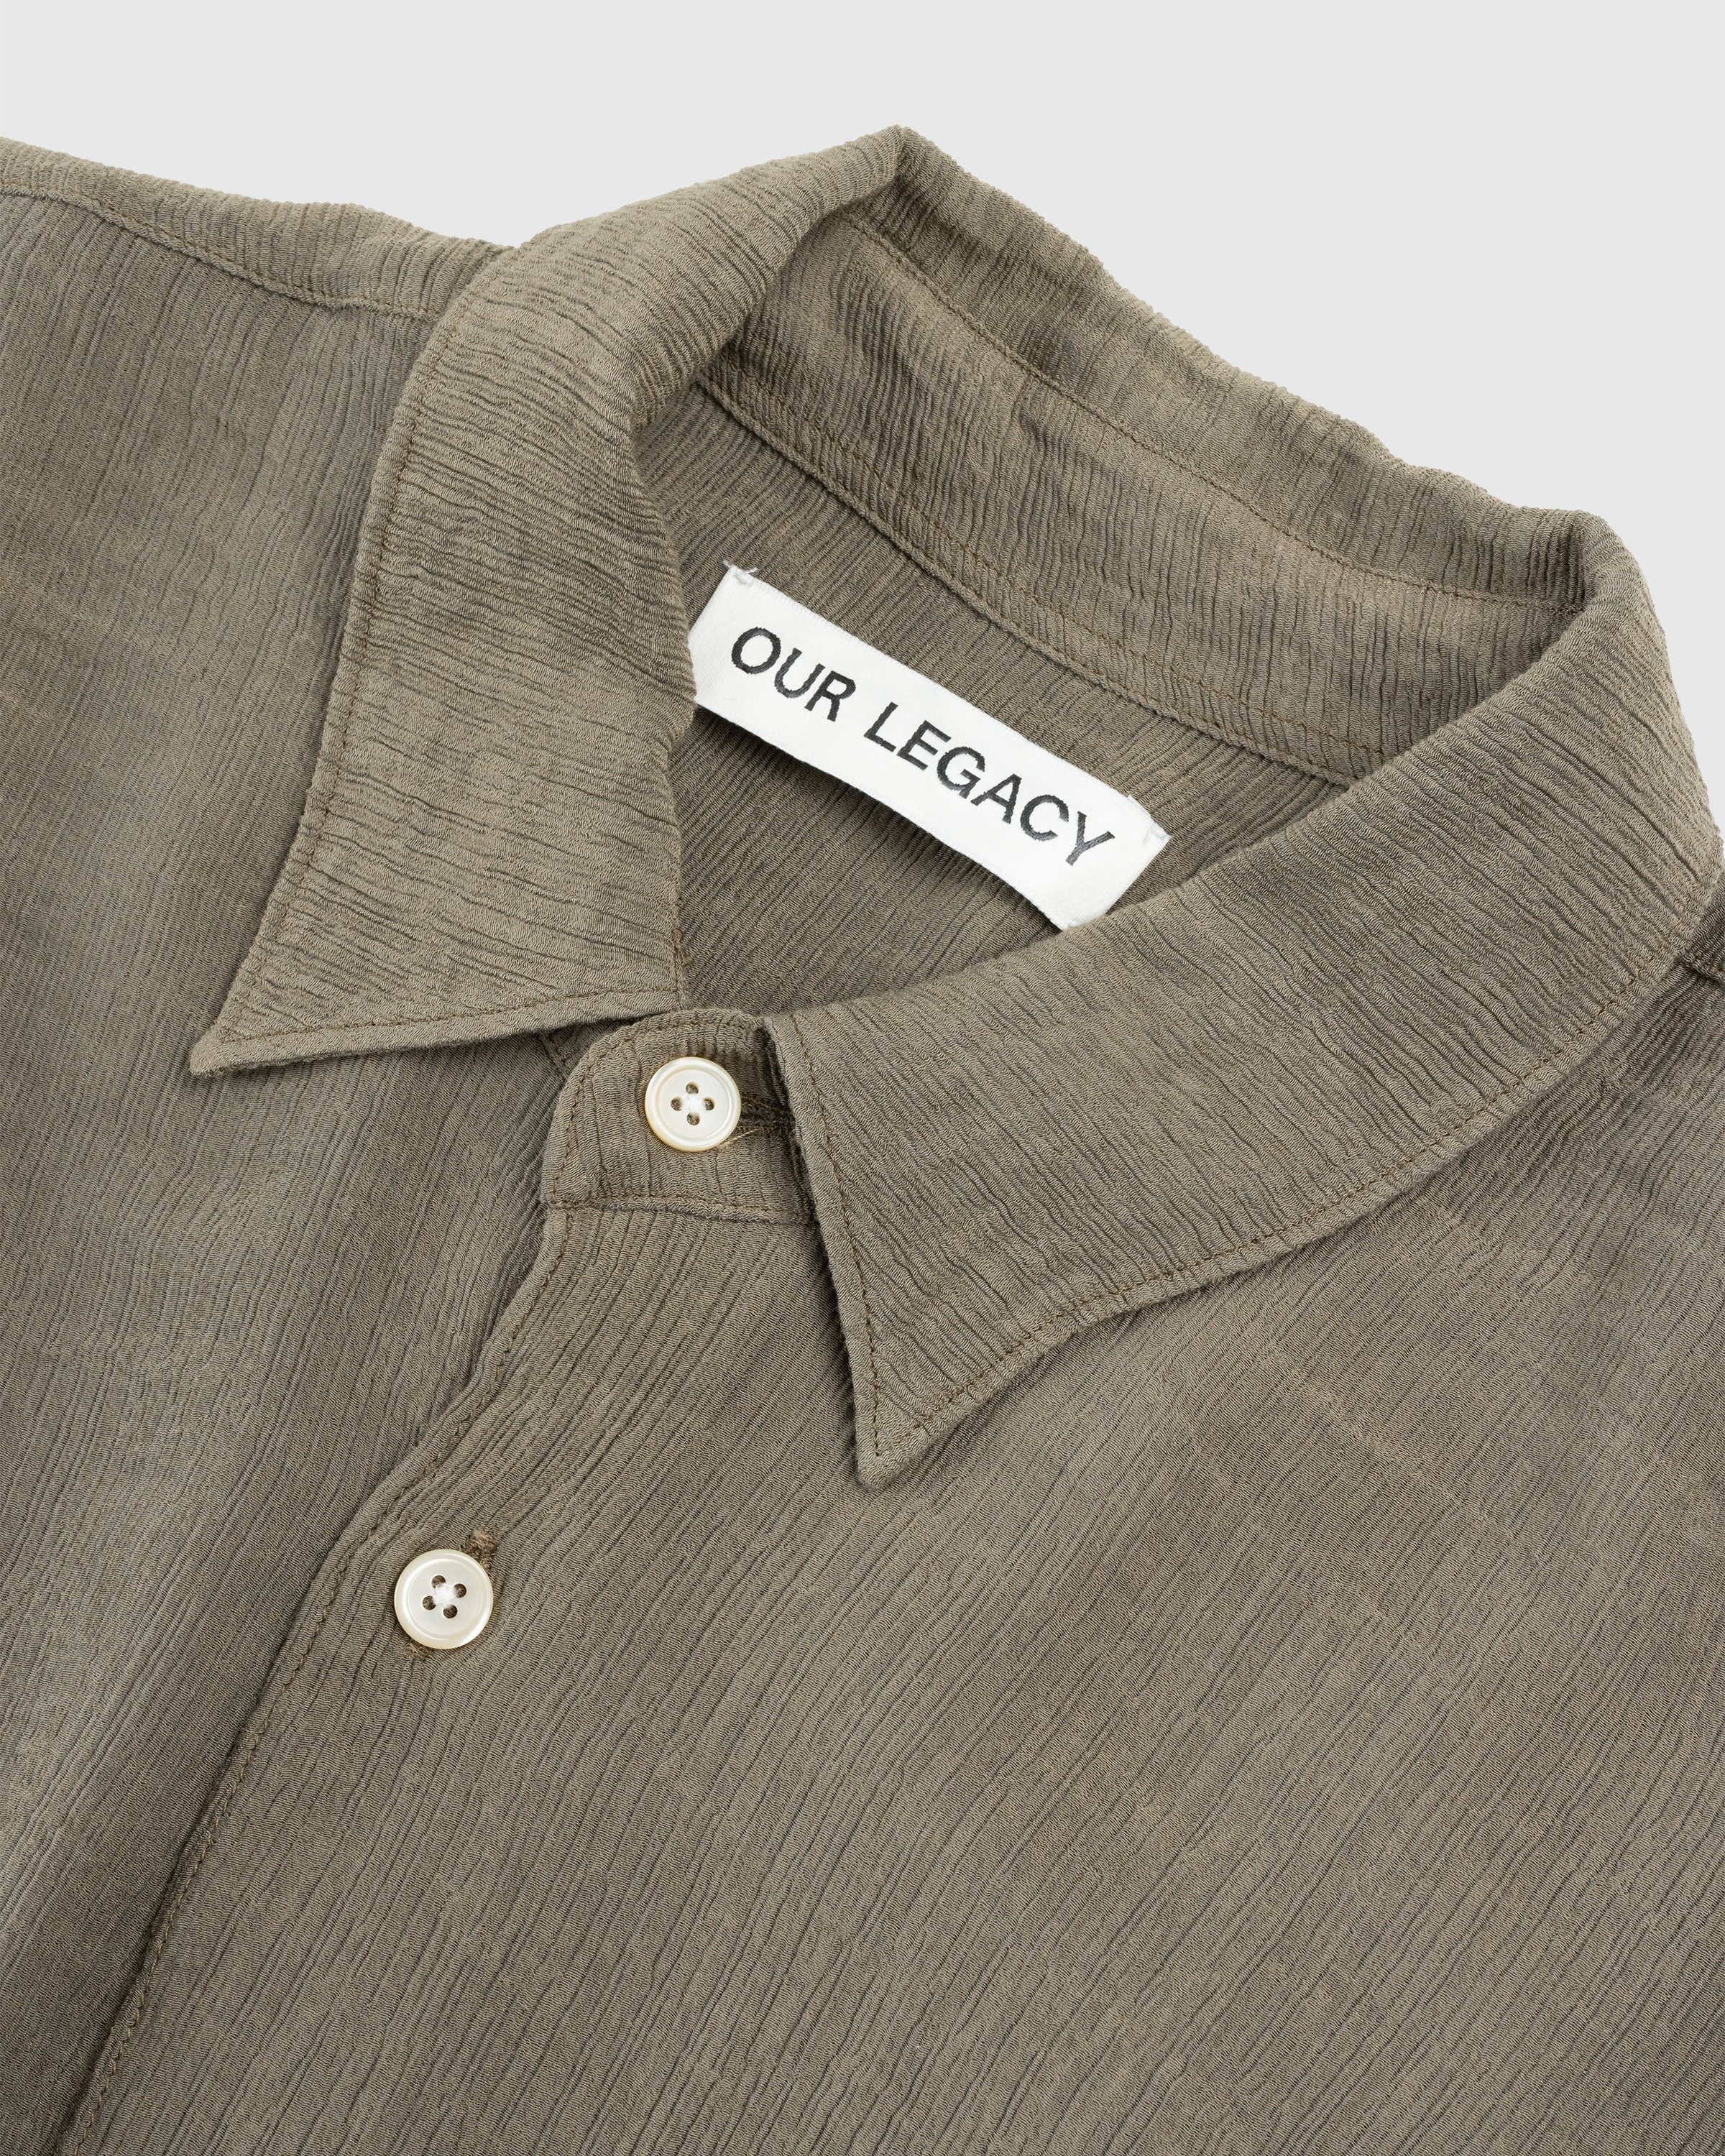 Our Legacy – Initial Shirt Muck Ruffle Viscose - Shirts - Brown - Image 5